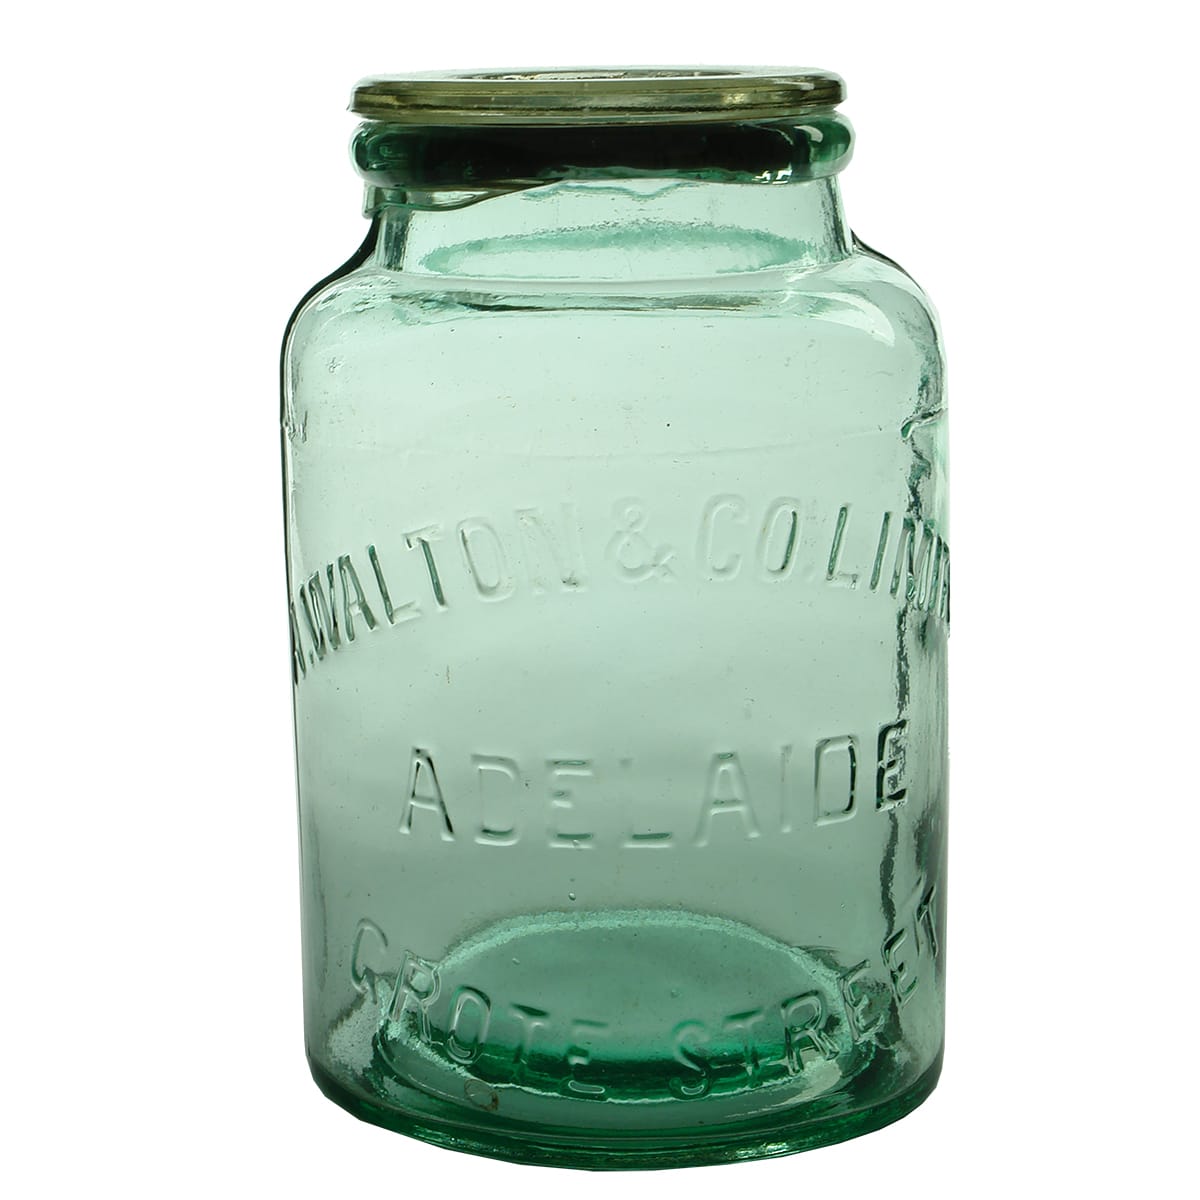 Lolly Jar. Walton & Co Ltd., Grote Street, Adelaide. Aqua. Half Gallon. (South Australia)